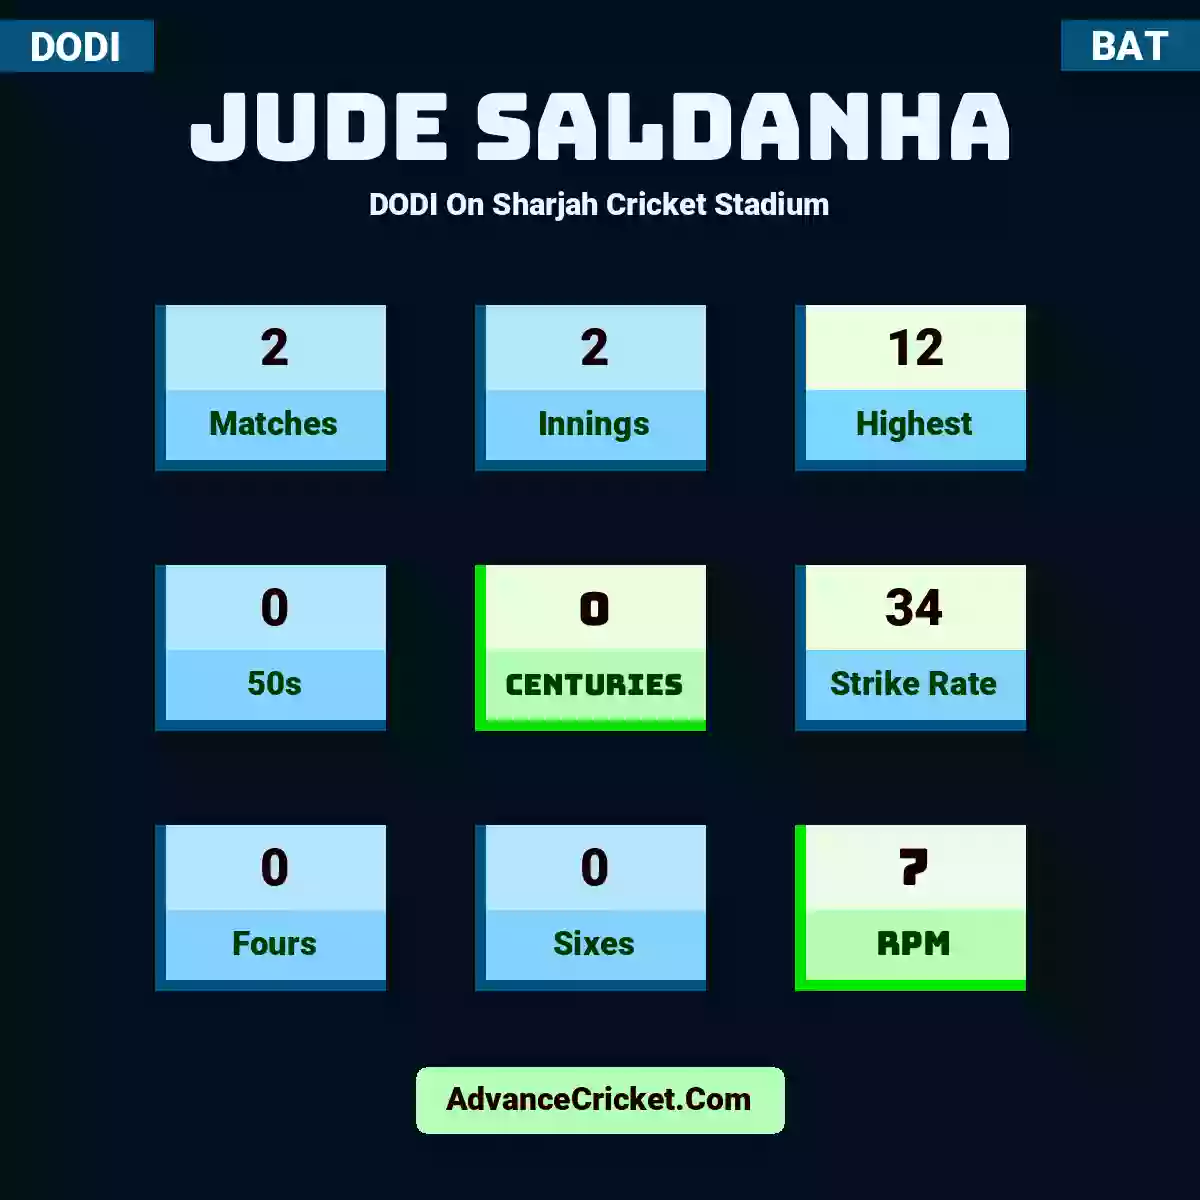 Jude Saldanha DODI  On Sharjah Cricket Stadium, Jude Saldanha played 2 matches, scored 12 runs as highest, 0 half-centuries, and 0 centuries, with a strike rate of 34. J.Saldanha hit 0 fours and 0 sixes, with an RPM of 7.